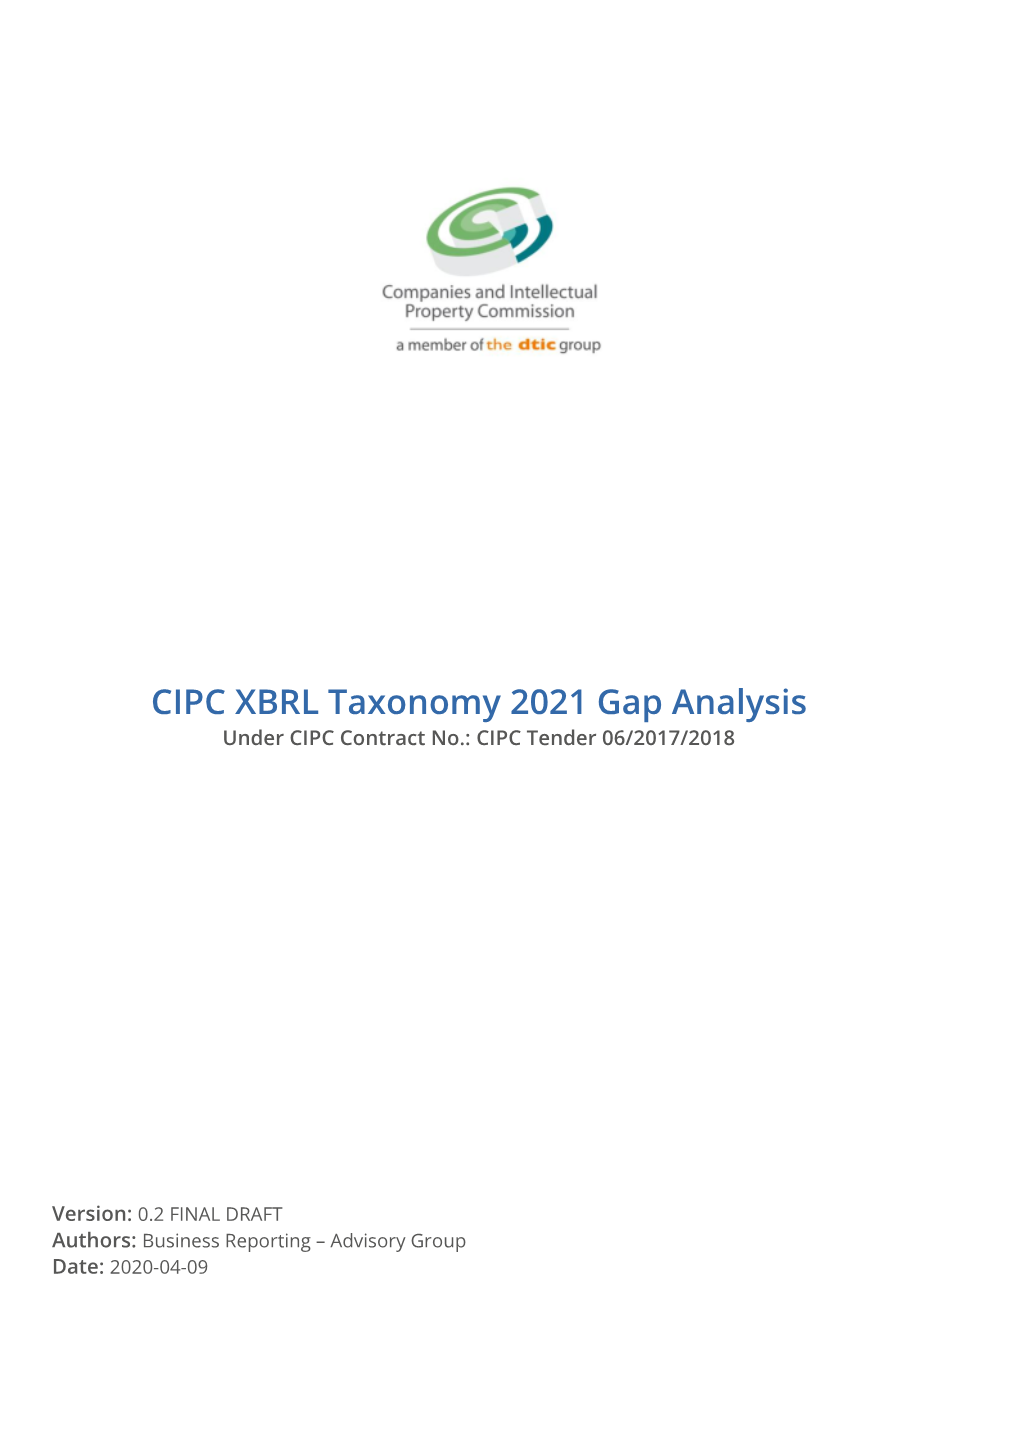 CIPC XBRL Taxonomy 2021 Gap Analysis Under CIPC Contract No.: CIPC Tender 06/2017/2018